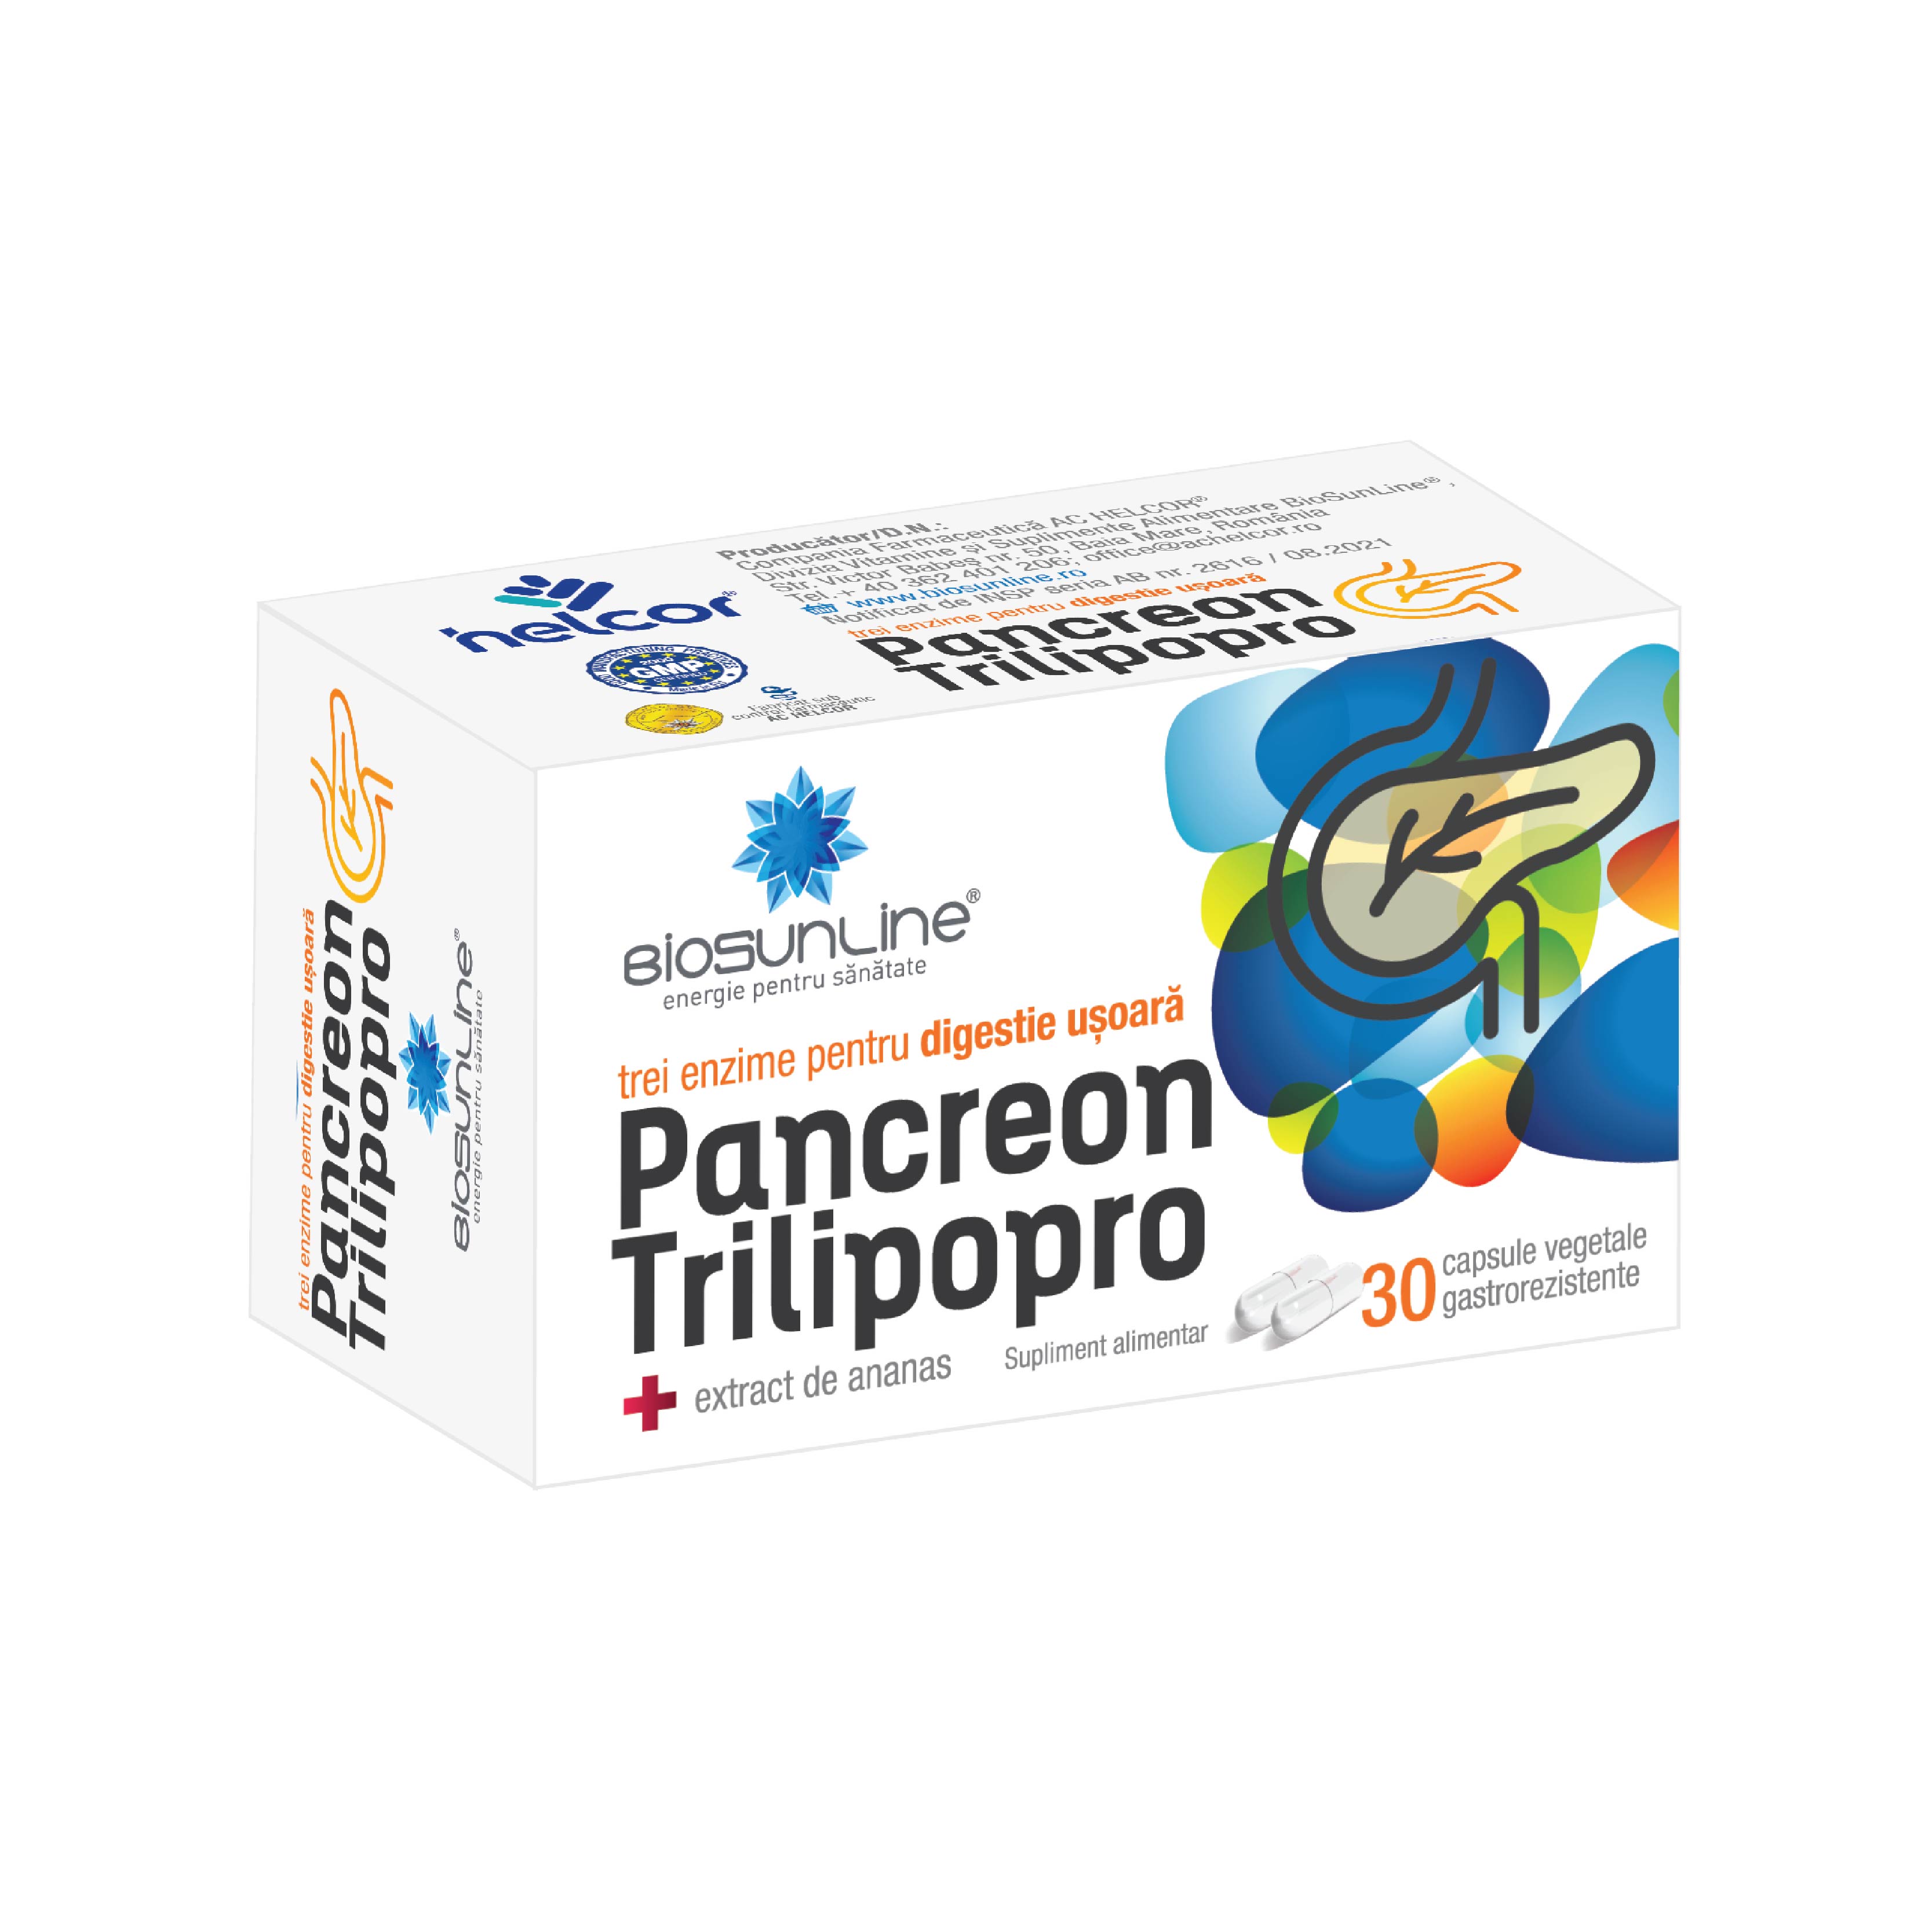 Enzime digestive Pancreon Trilipopro BioSunLine, 30 capsule vegetale gastrorezistente, Helcor